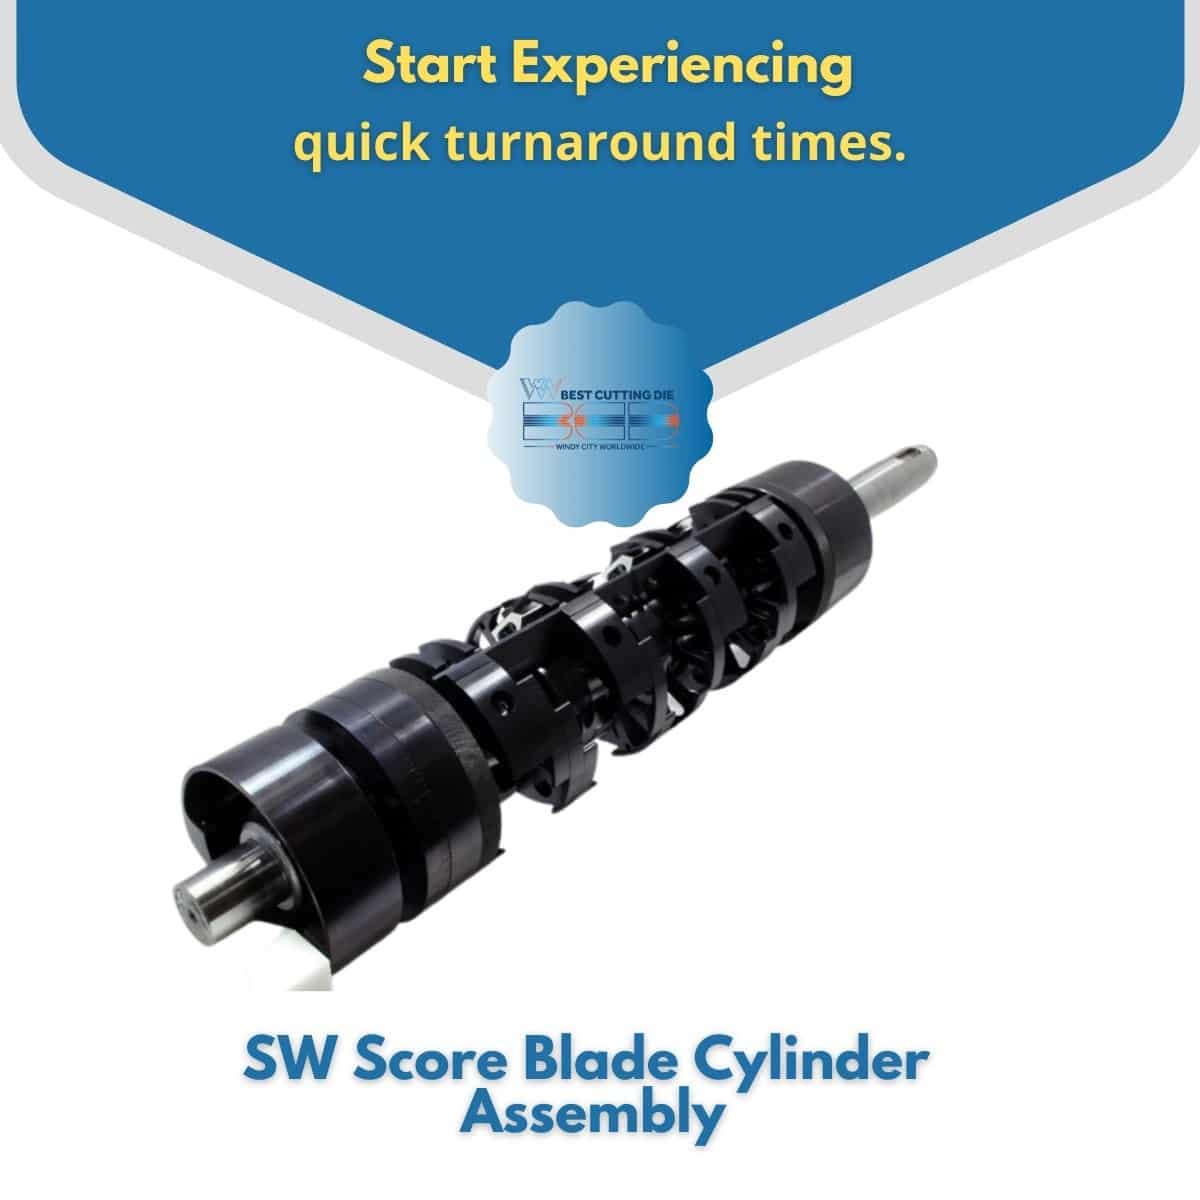 SW Score Blade Cylinder Assembly 